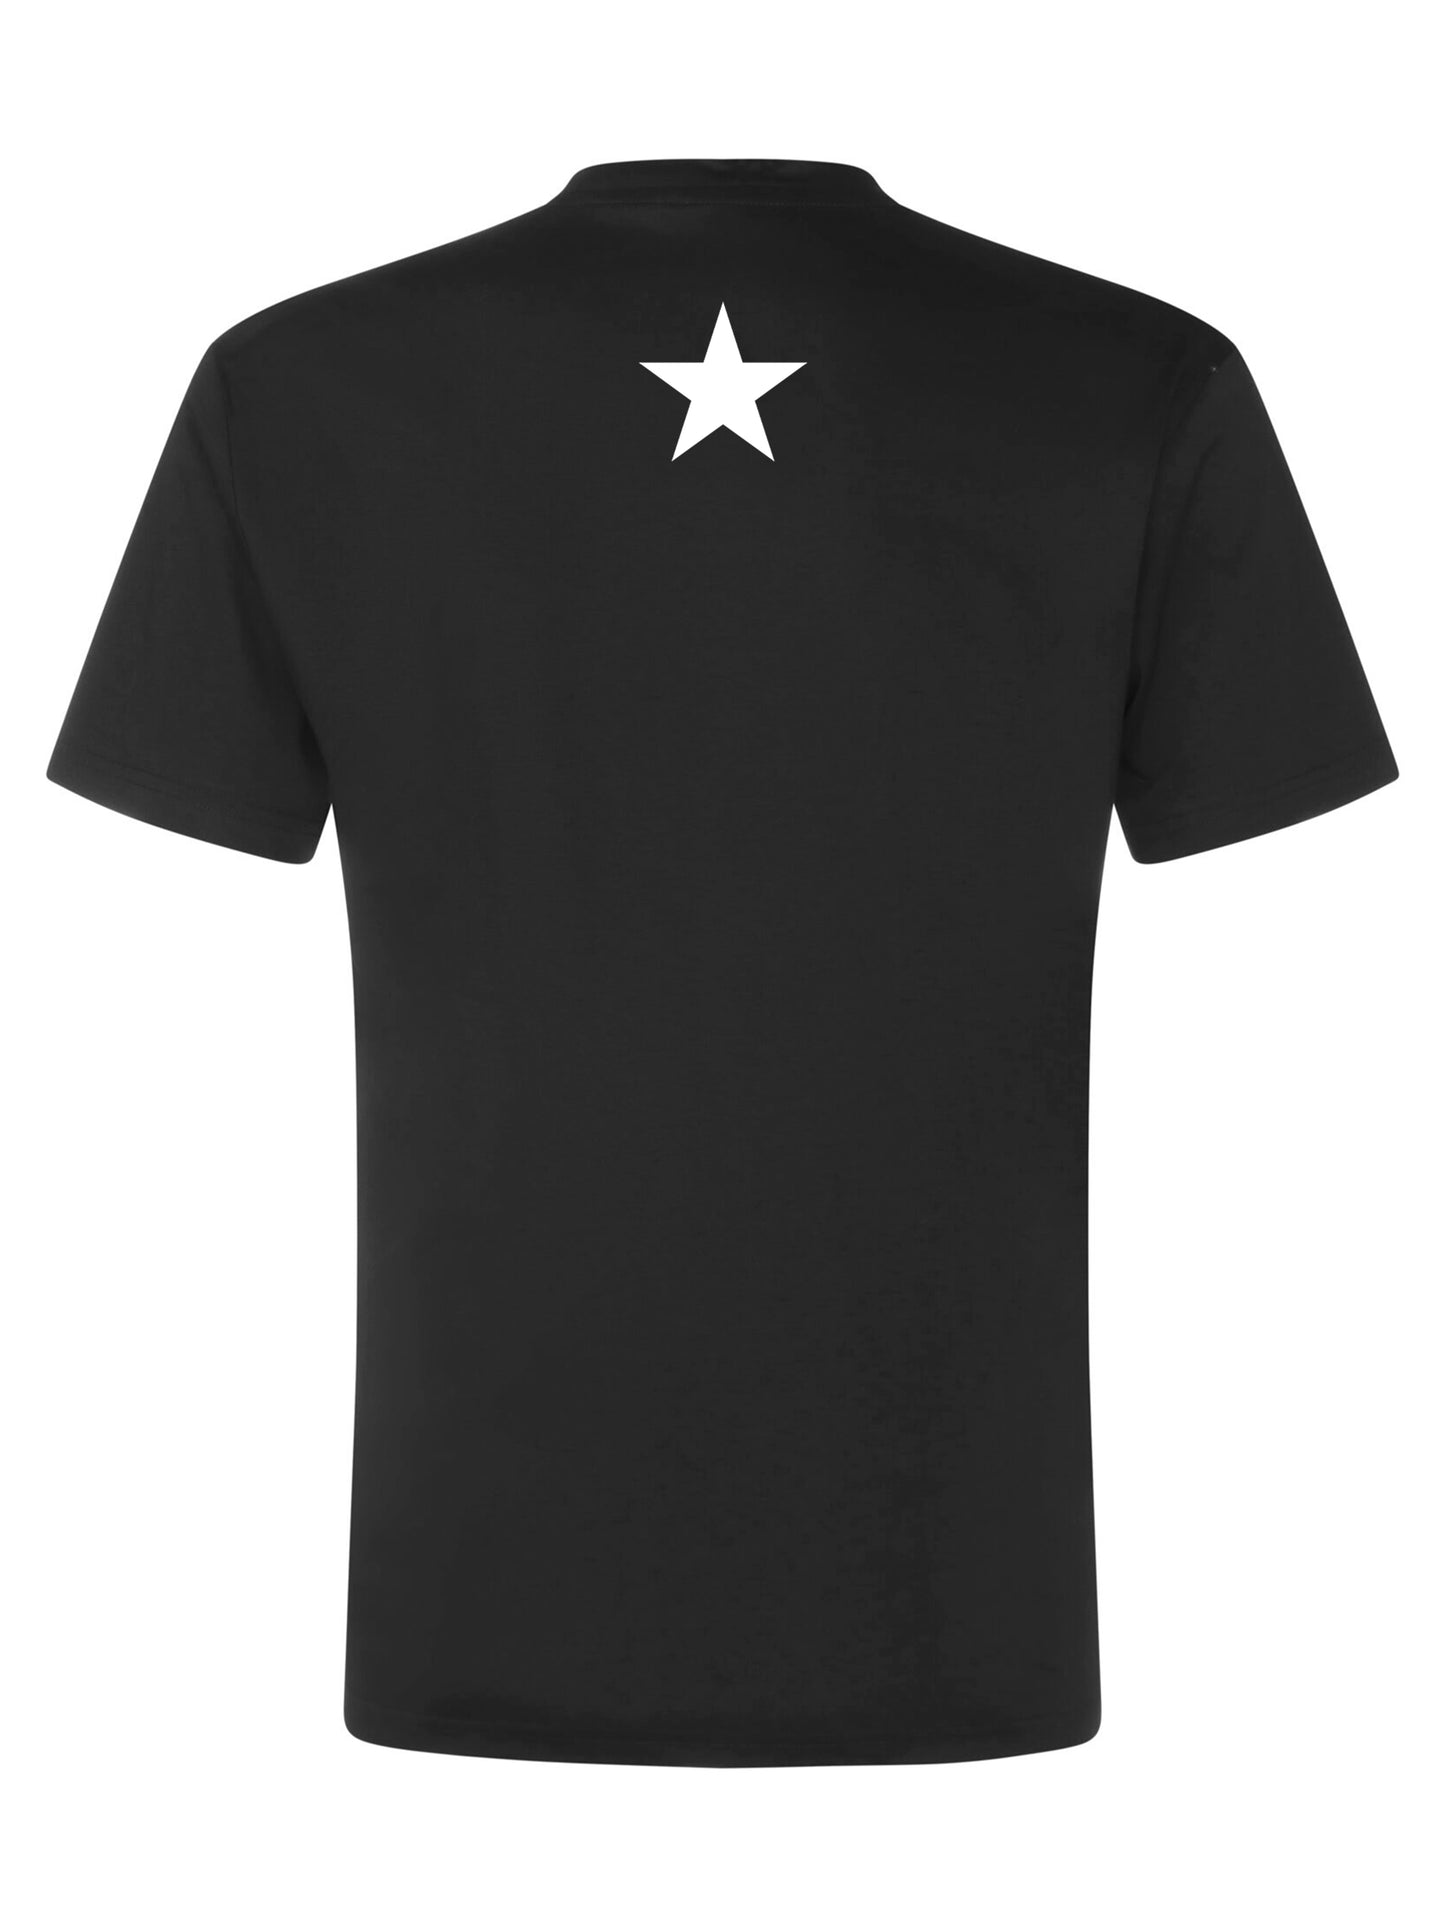 Superstar Diamonds Chappy T-shirt (v-neck)